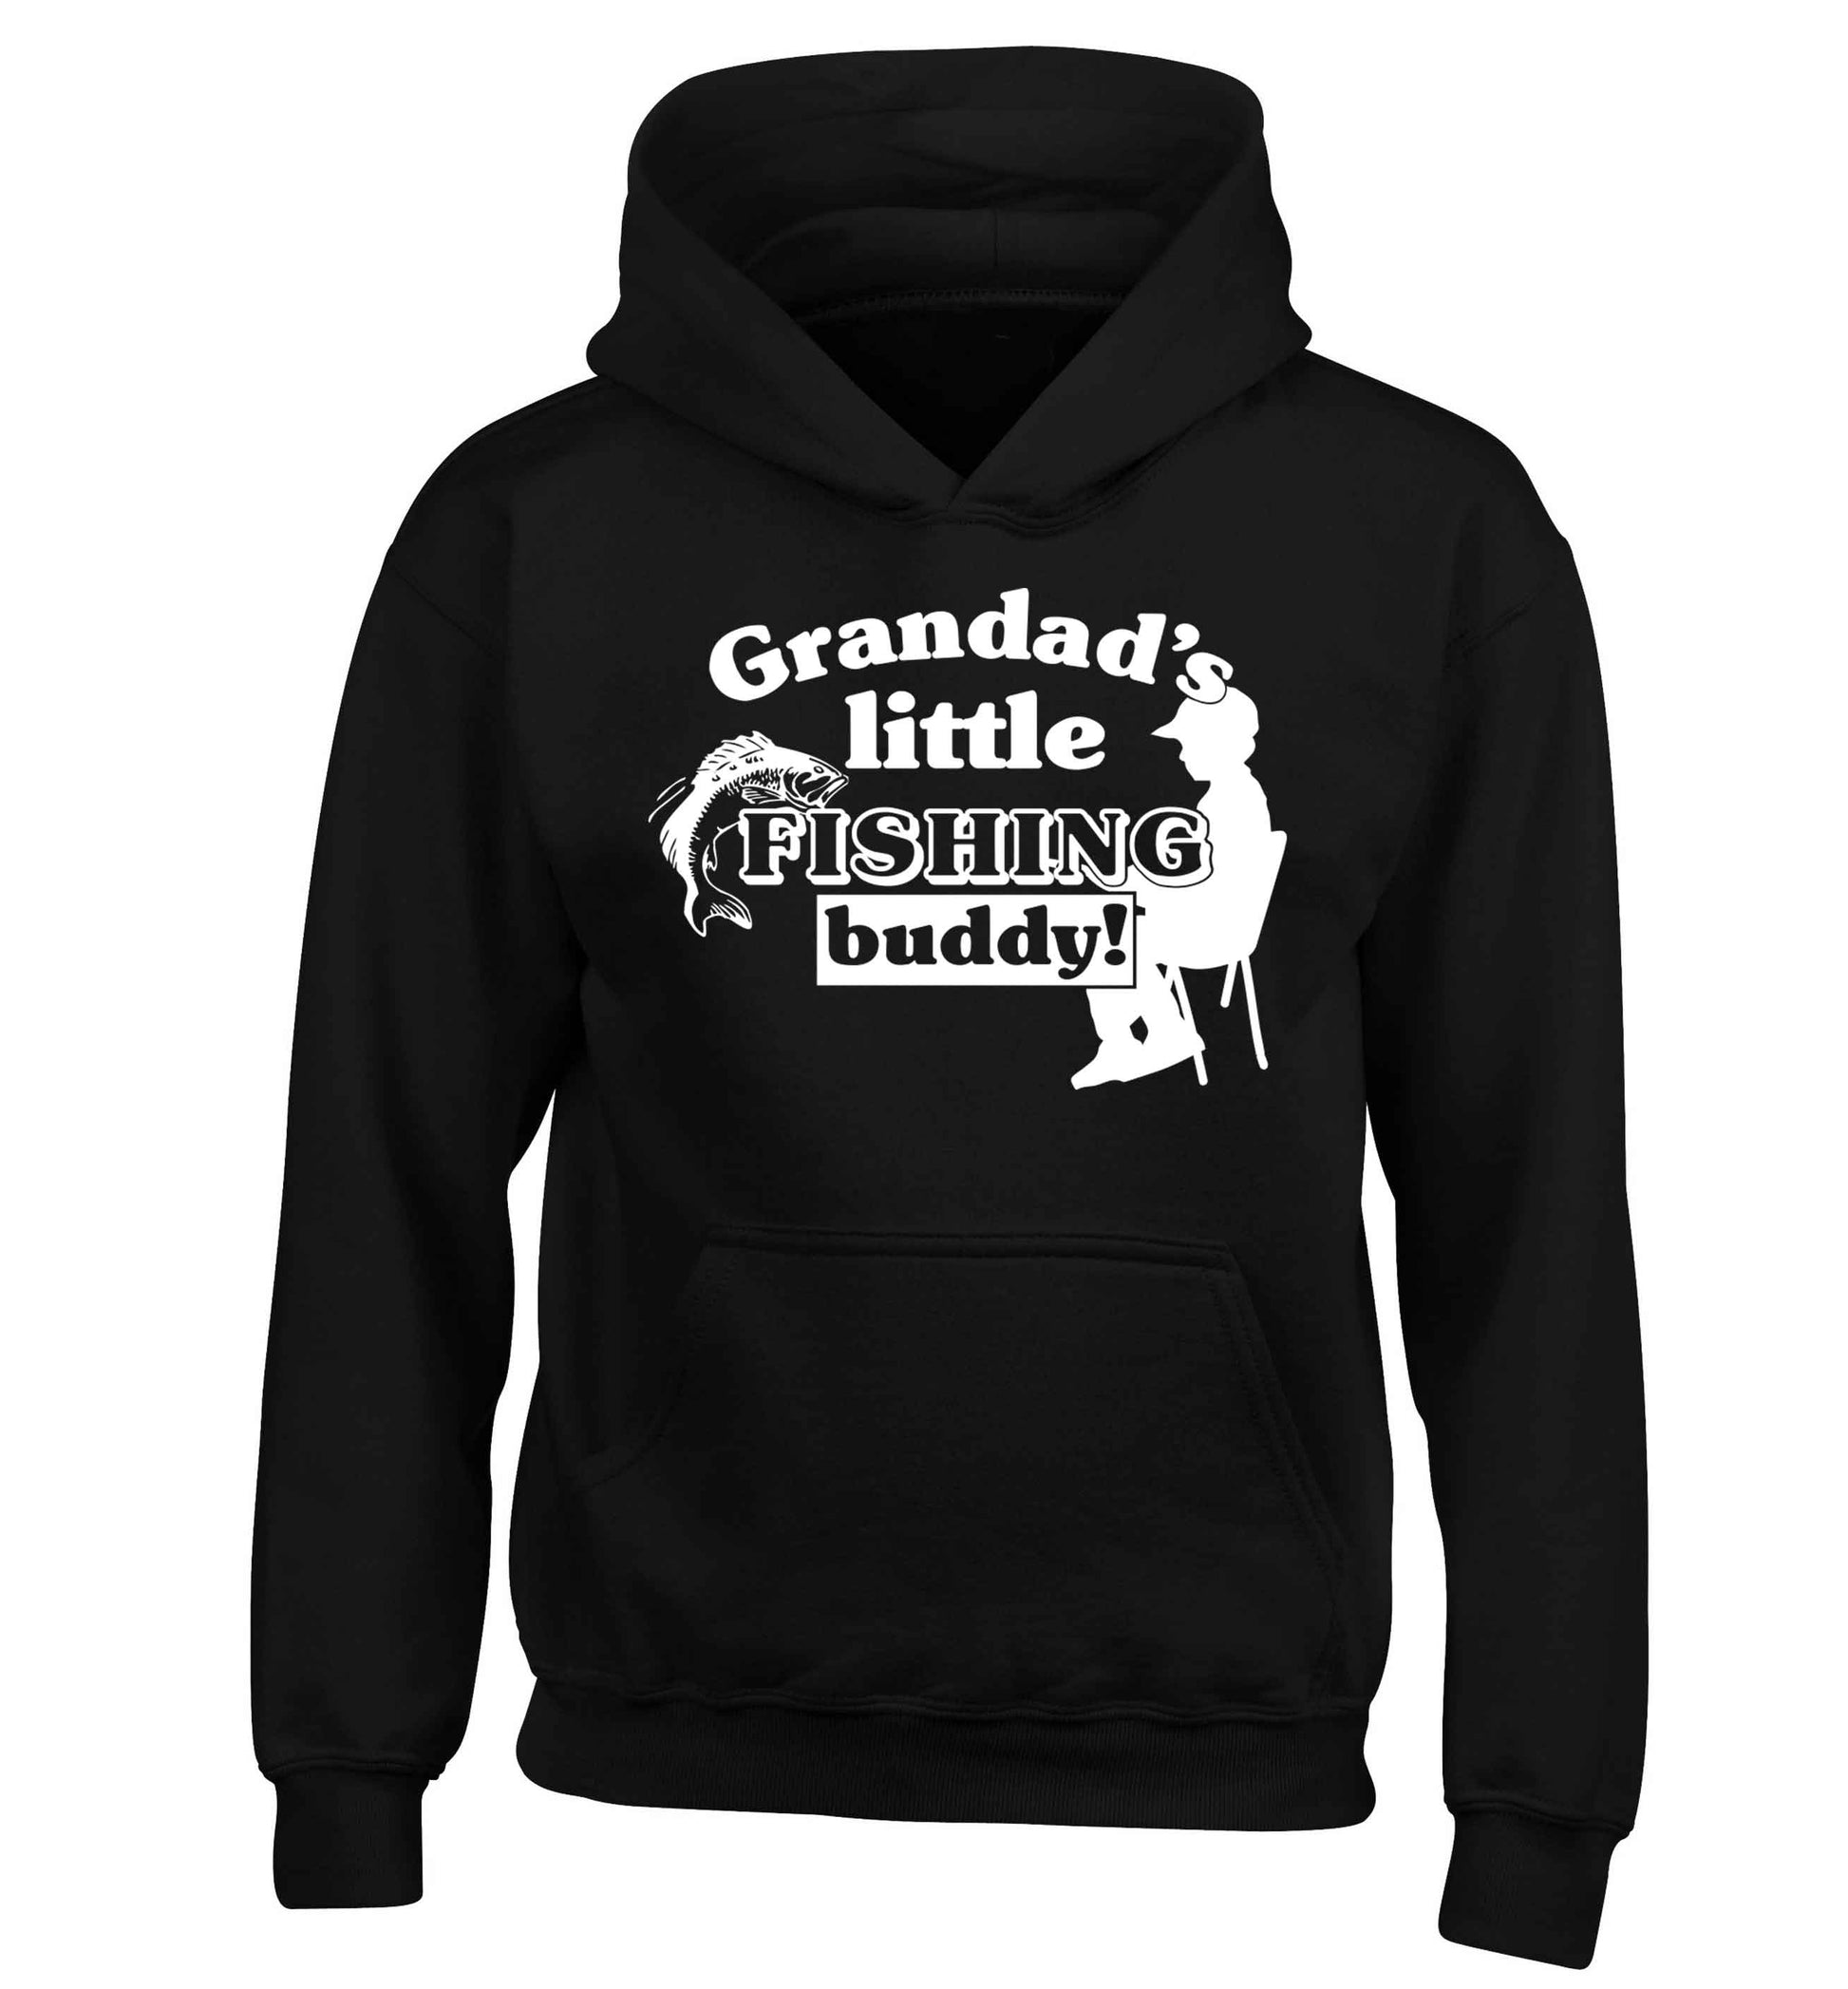 Grandad's little fishing buddy! children's black hoodie 12-13 Years